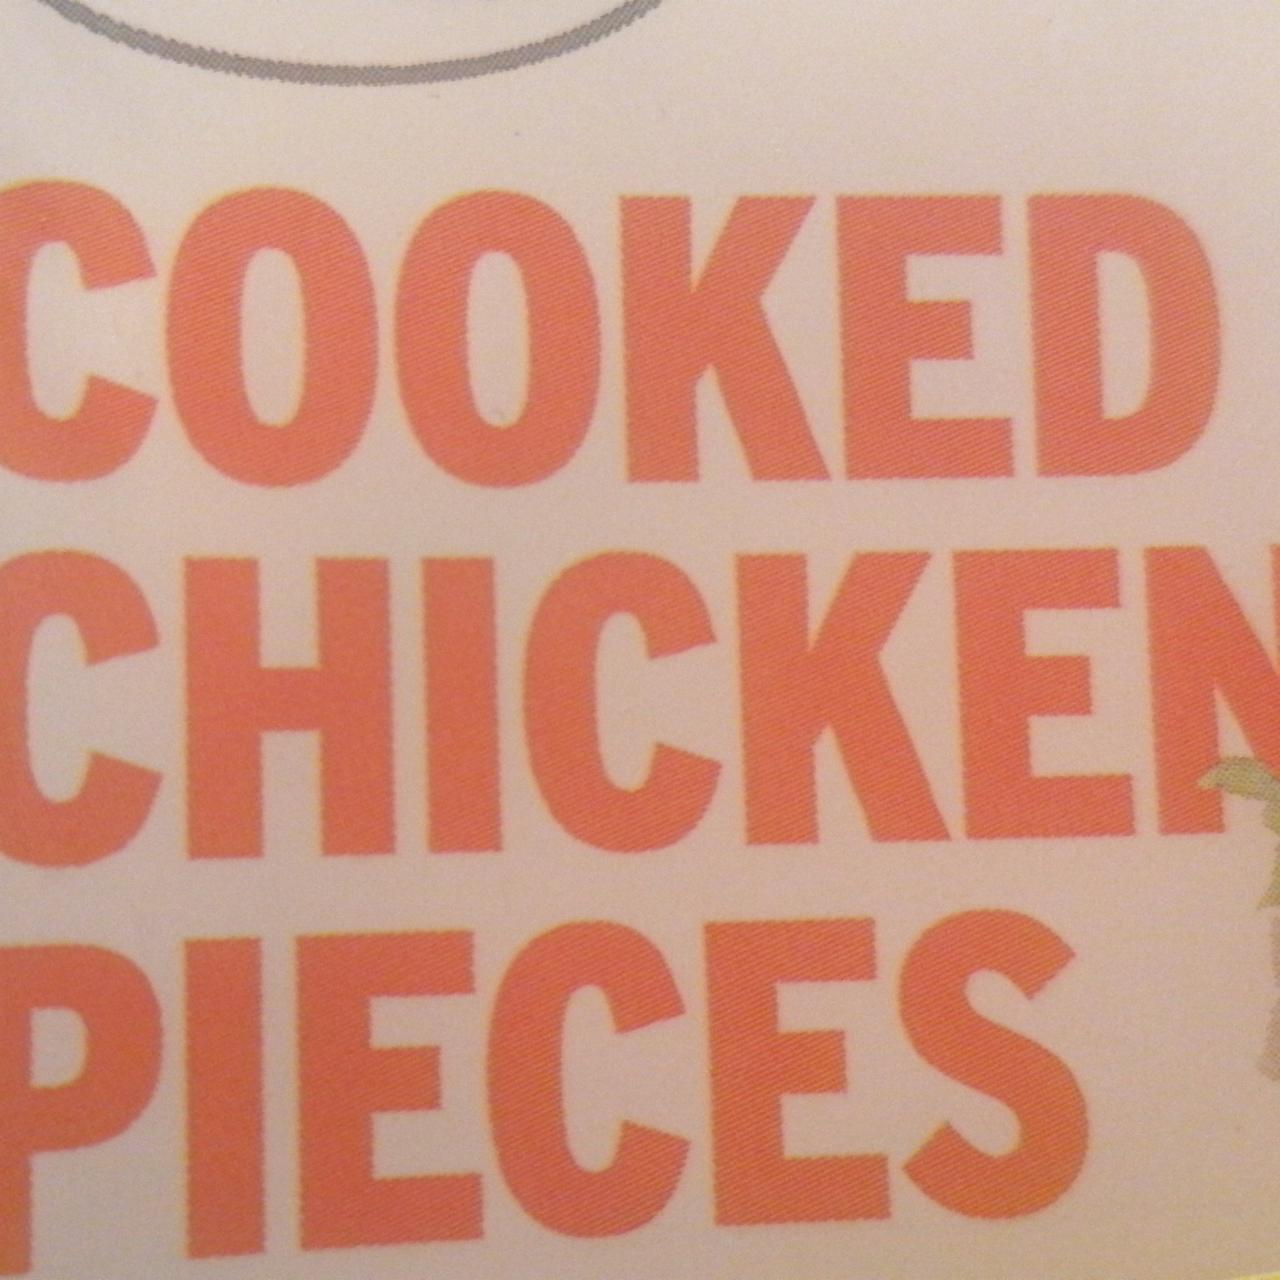 Fotografie - Cooked chicken pieces Morrisons